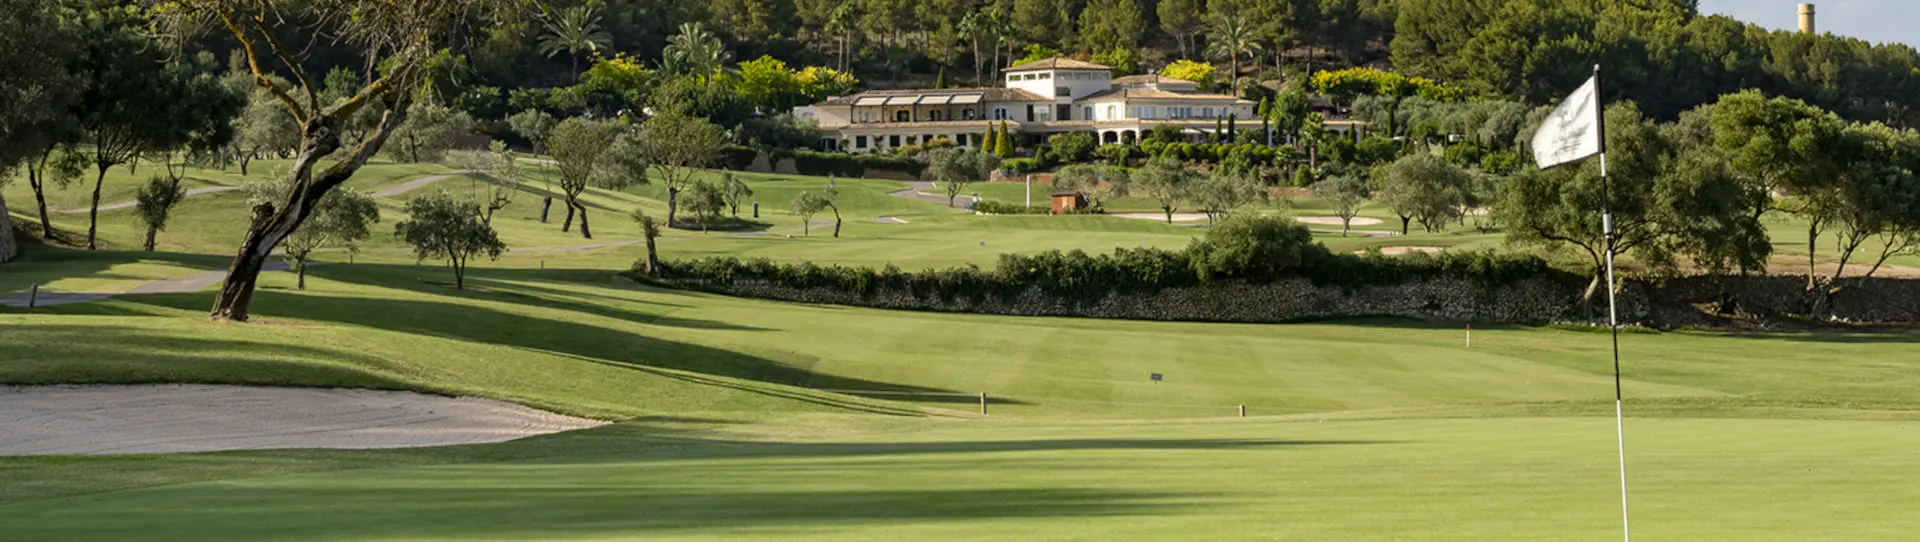 Spain golf holidays - Arabella Golf Mallorca Duo SMG+SVG - Photo 2